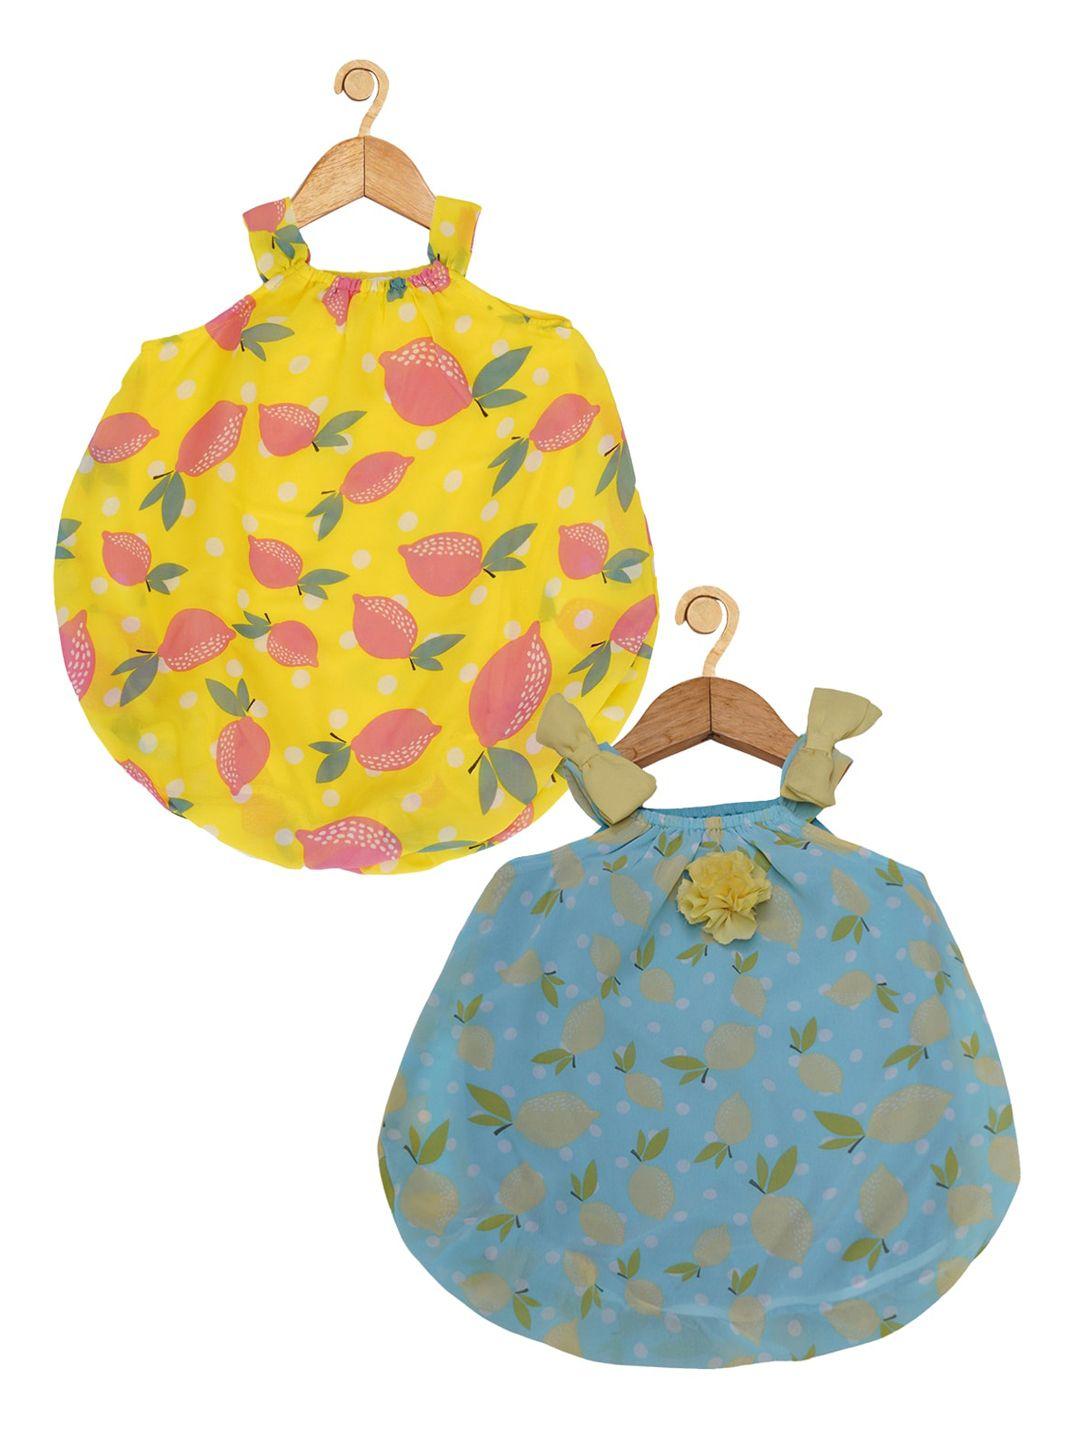 Creative Infant Girls Pack of 2 Printed Romper Dresses